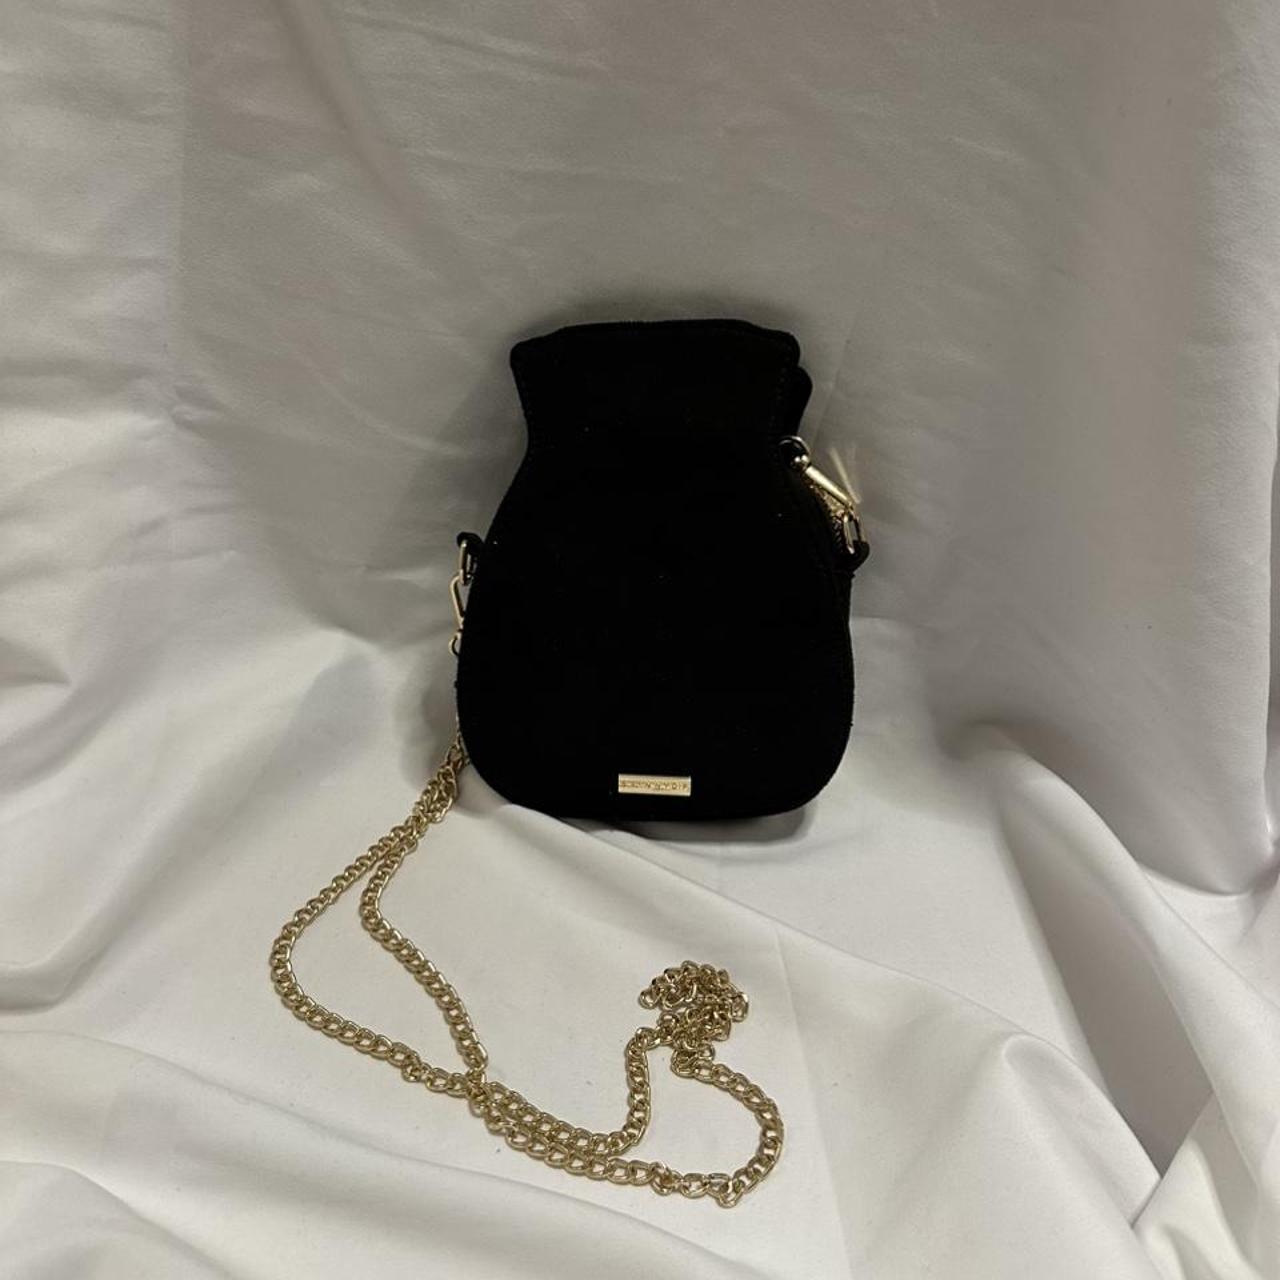 Skinnydip Women's Black and Gold Bag (2)